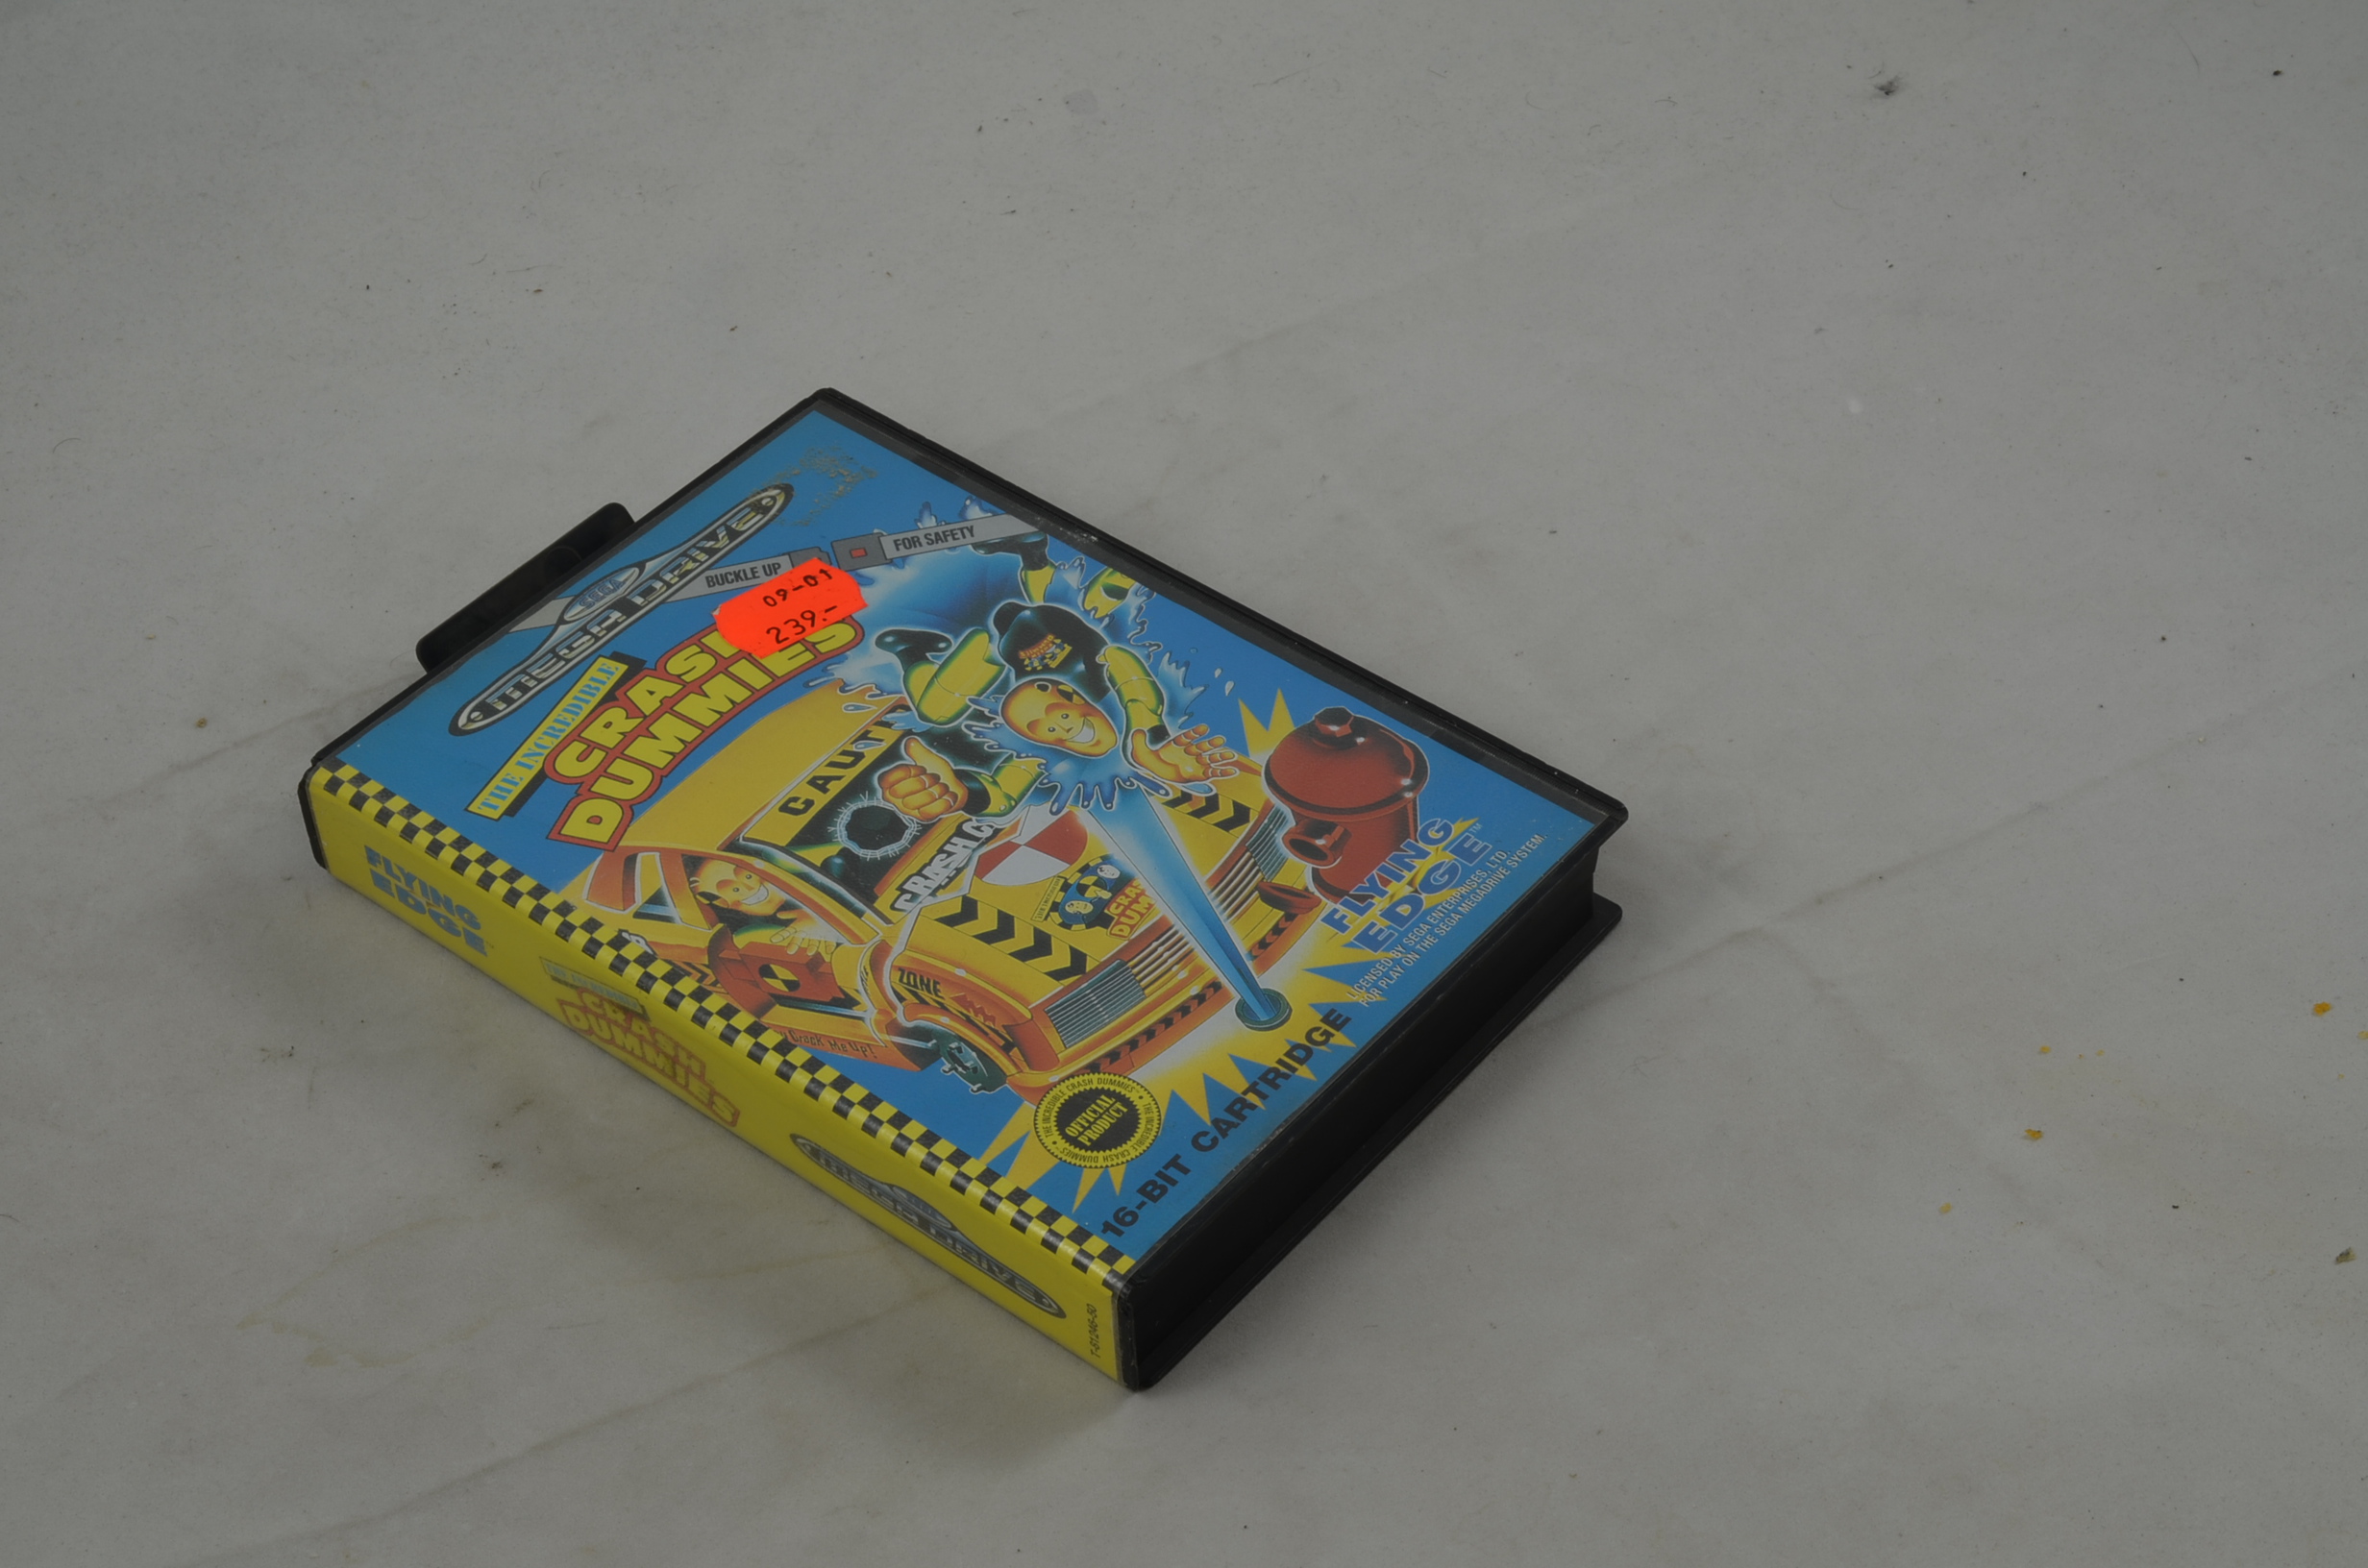 Produktbild von The Incredible Crash Dummies Sega Mega Drive Spiel CIB (sehr gut)